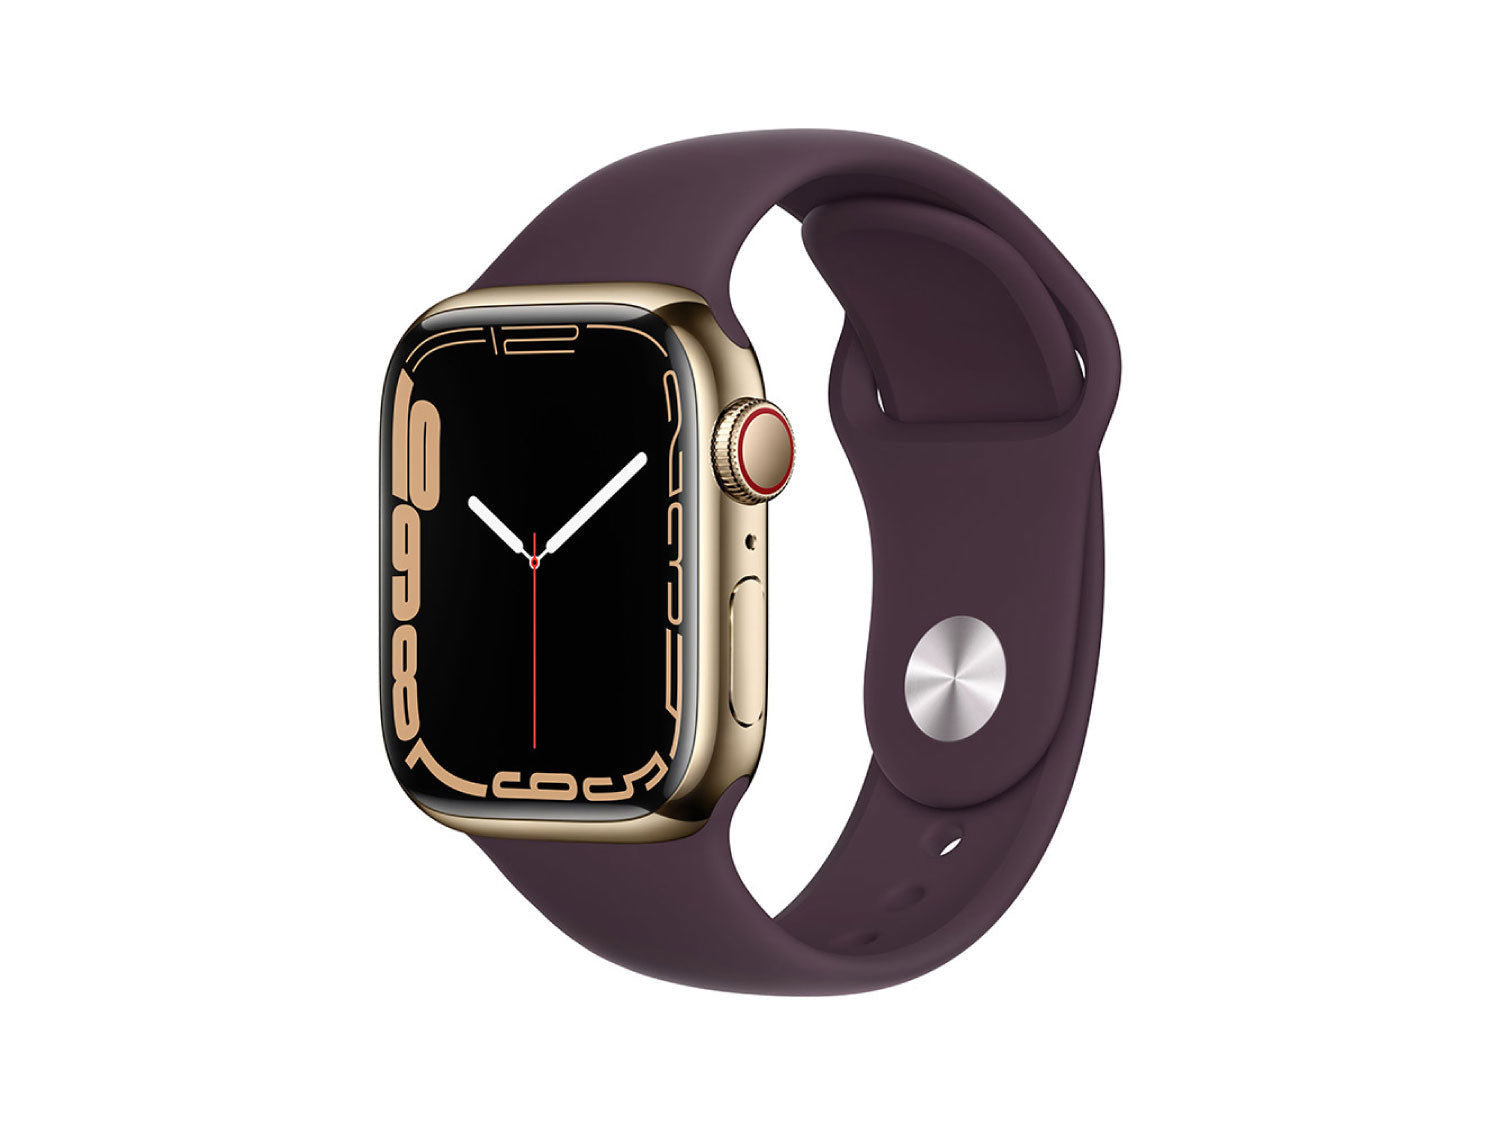 Caja de acero inoxidable Apple Watch Series 7 con correa deportiva color cereza oscuro - Regular